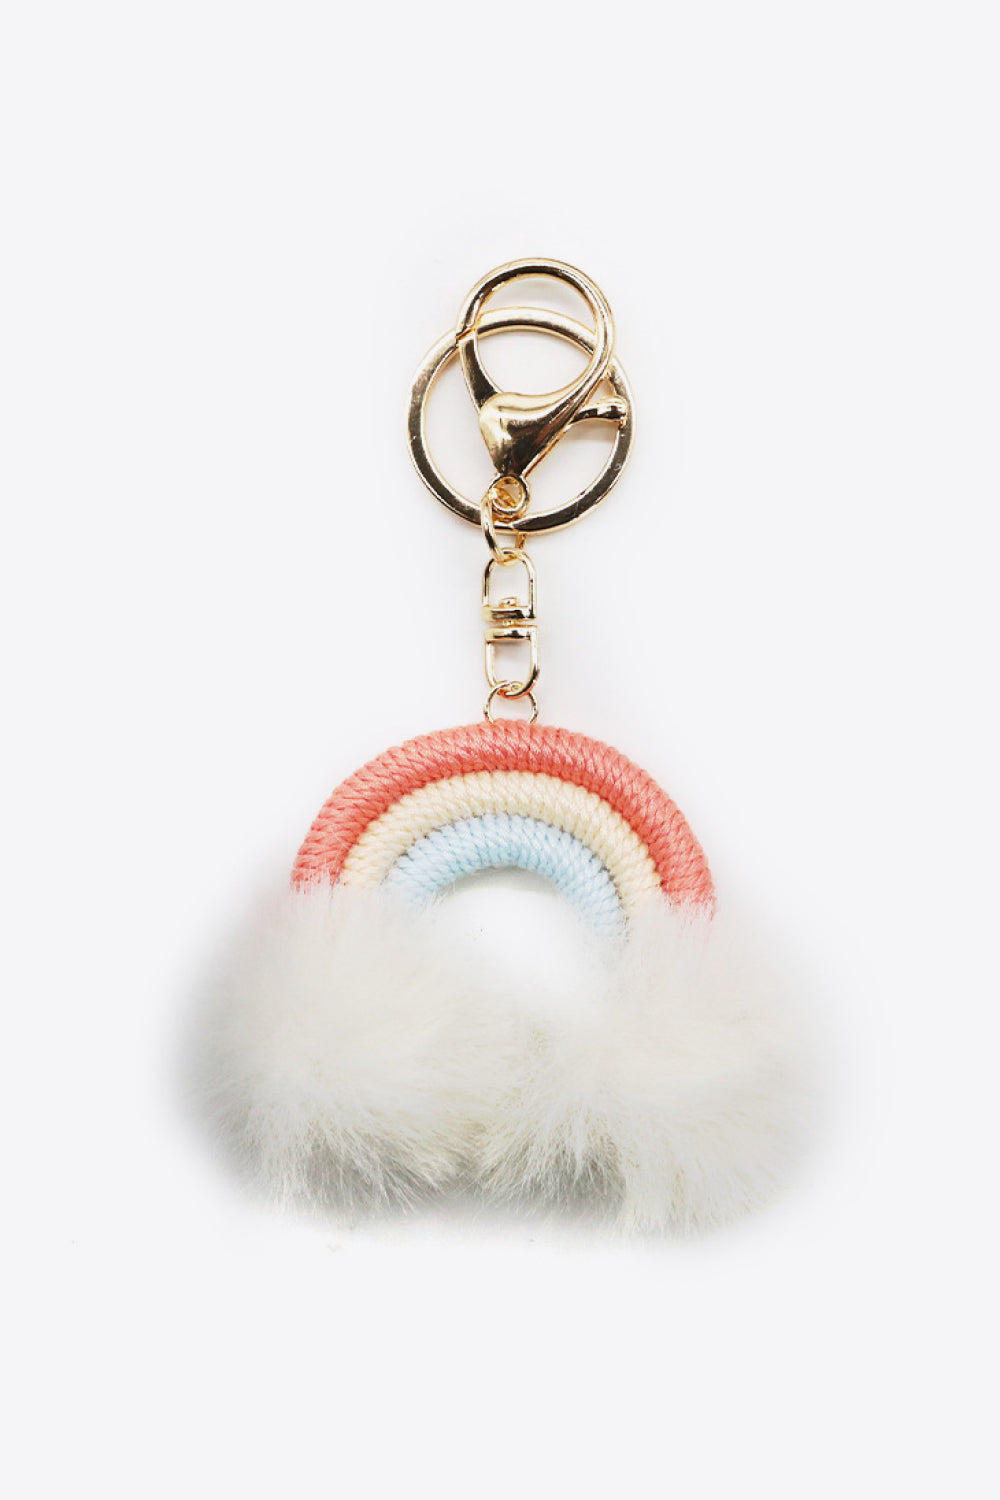 Trendsi Cupid Beauty Supplies White / One Size Keychains Assorted 4-Pack Rainbow Pom Pom Keychain